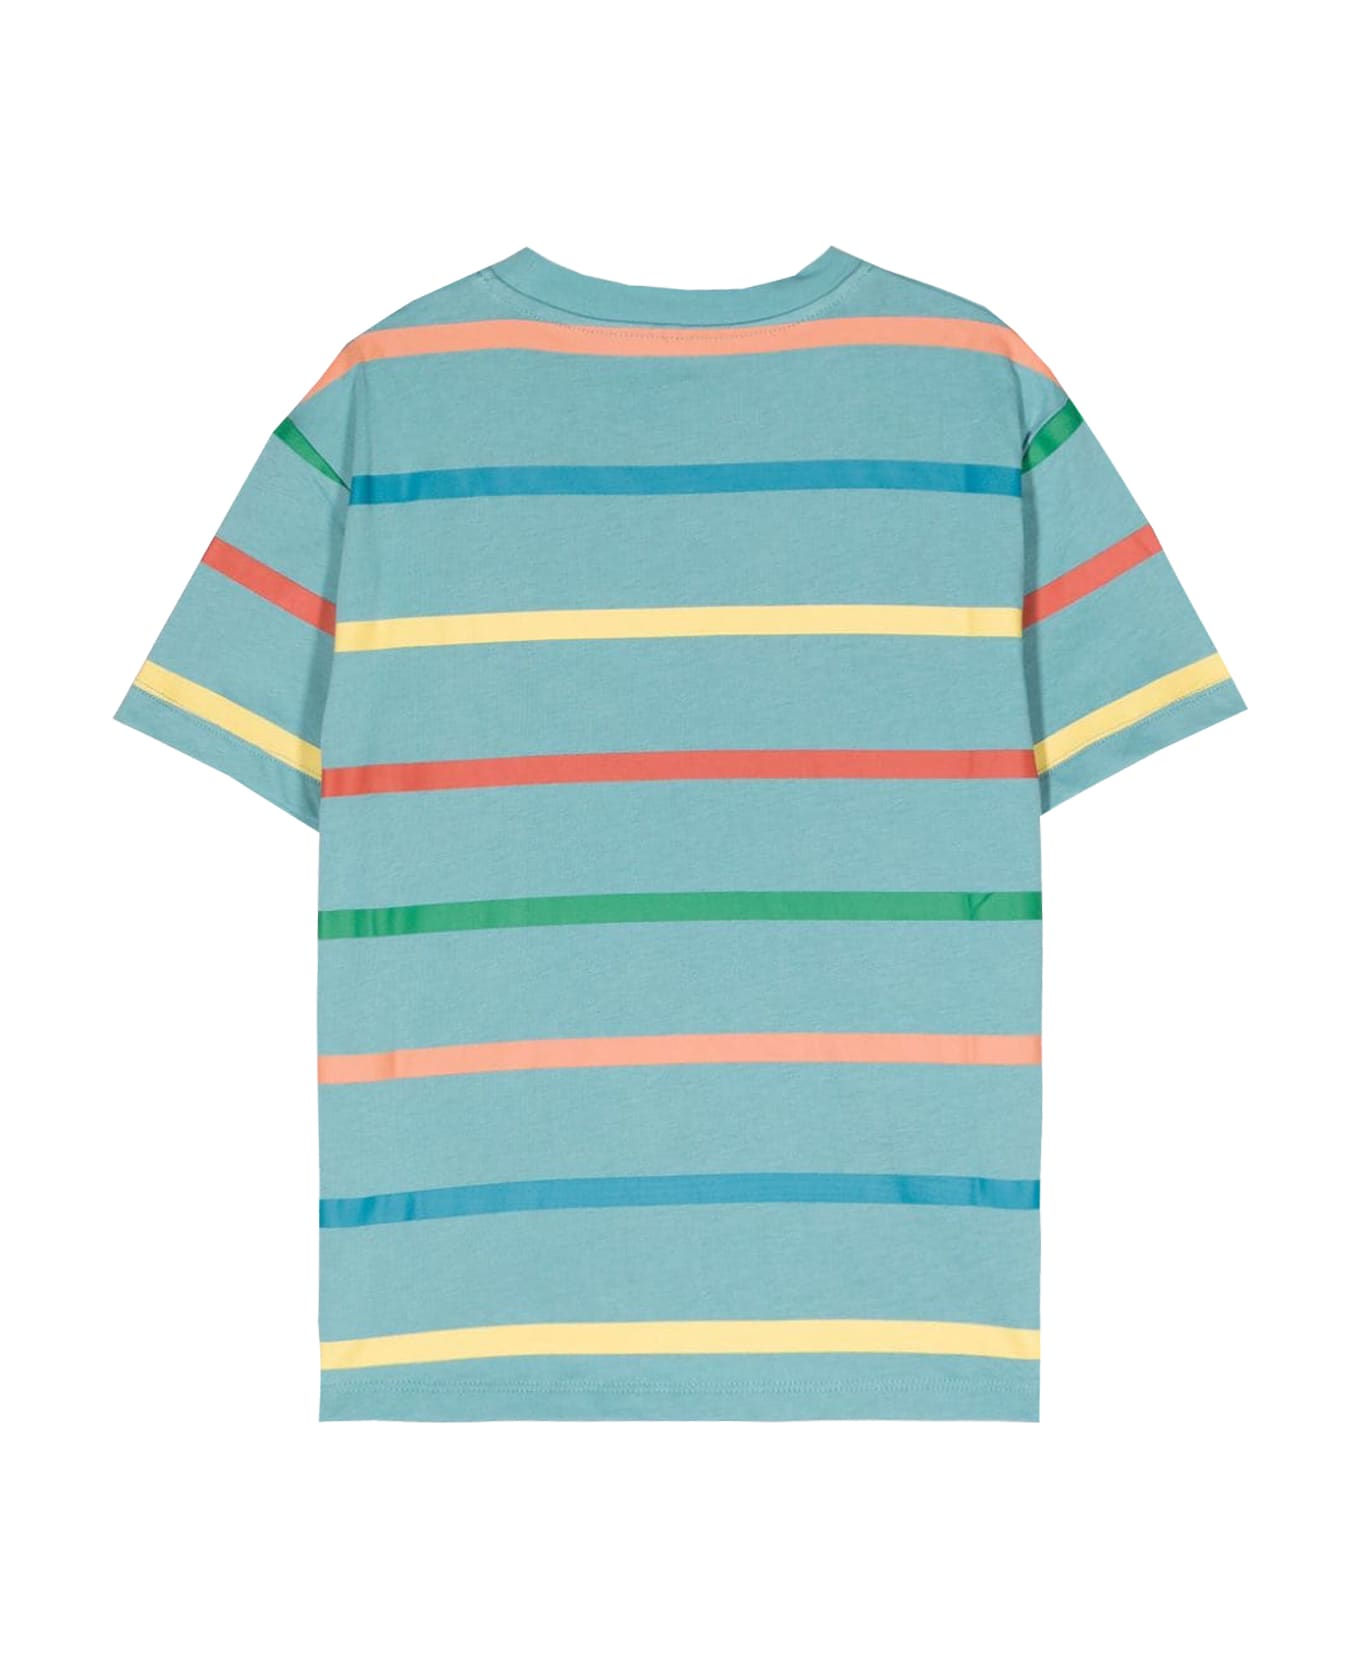 Stella McCartney Kids T-shirt With Print - Light blue